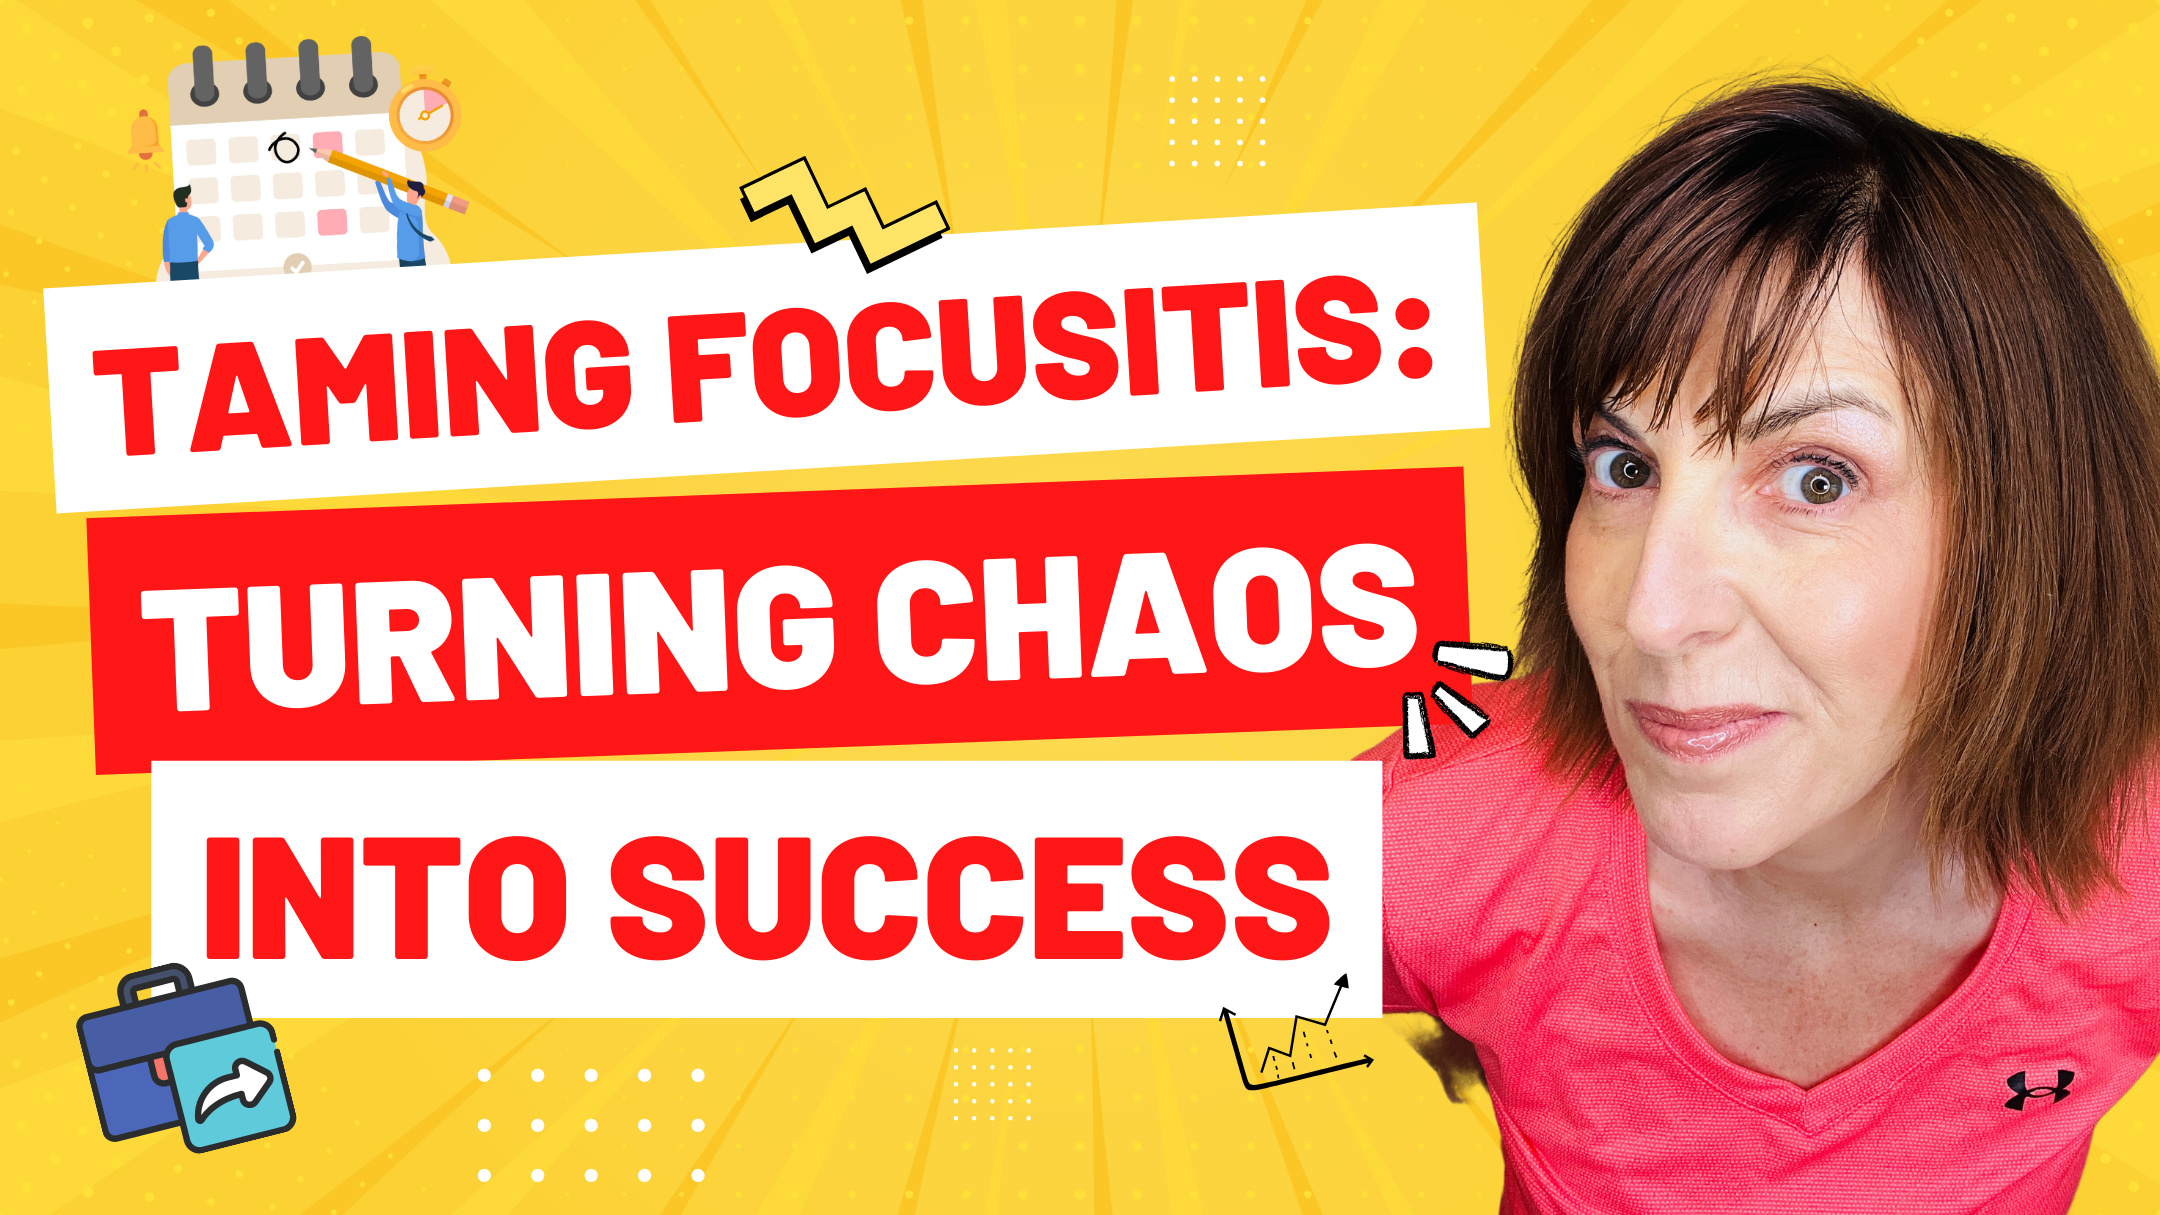 Taming Focusitis: Turning Chaos into Success